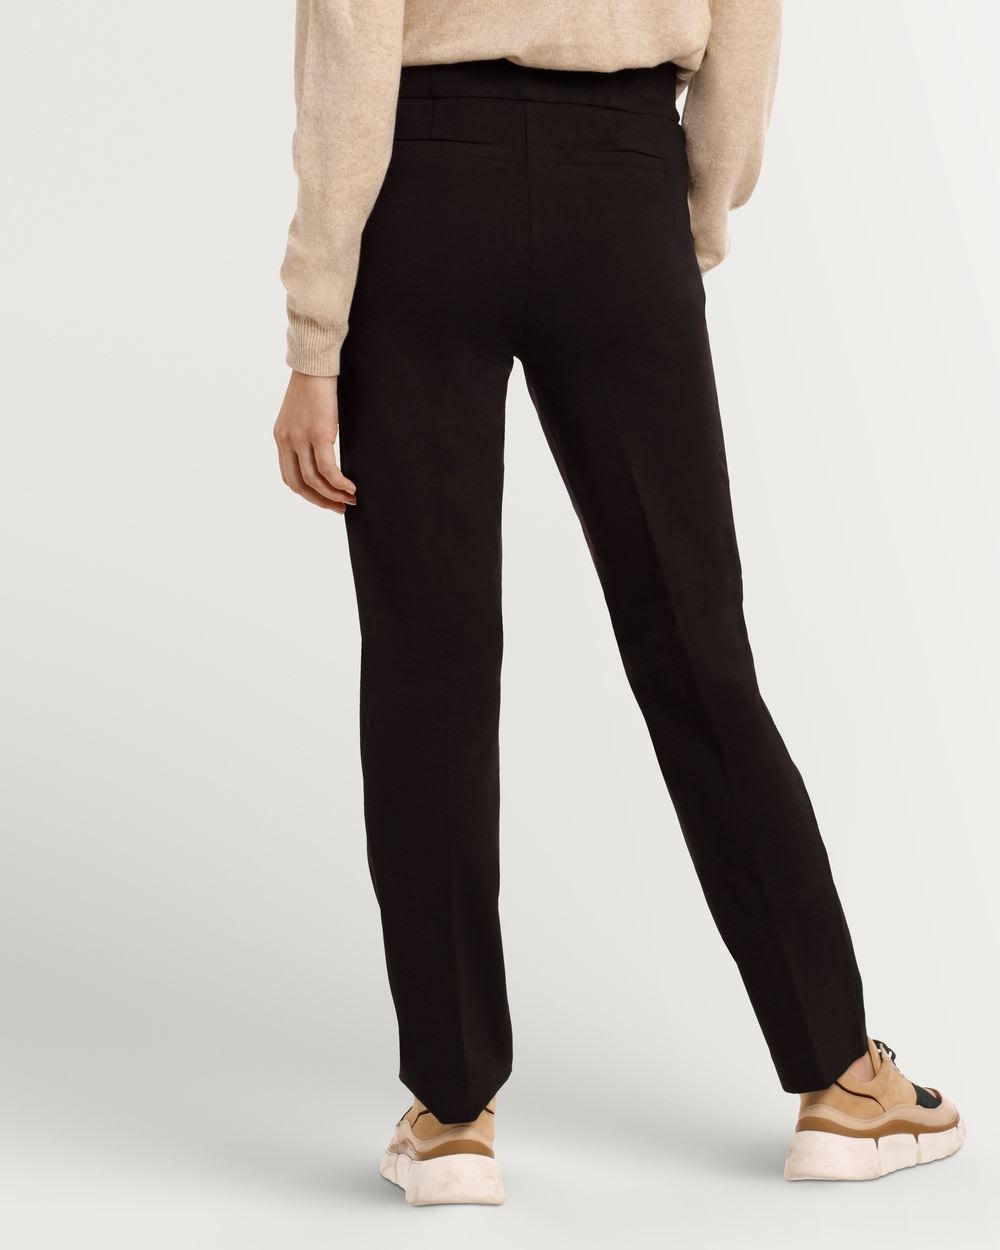 Pantalon noir à jambe droite Le Stretch Moderne – Petite